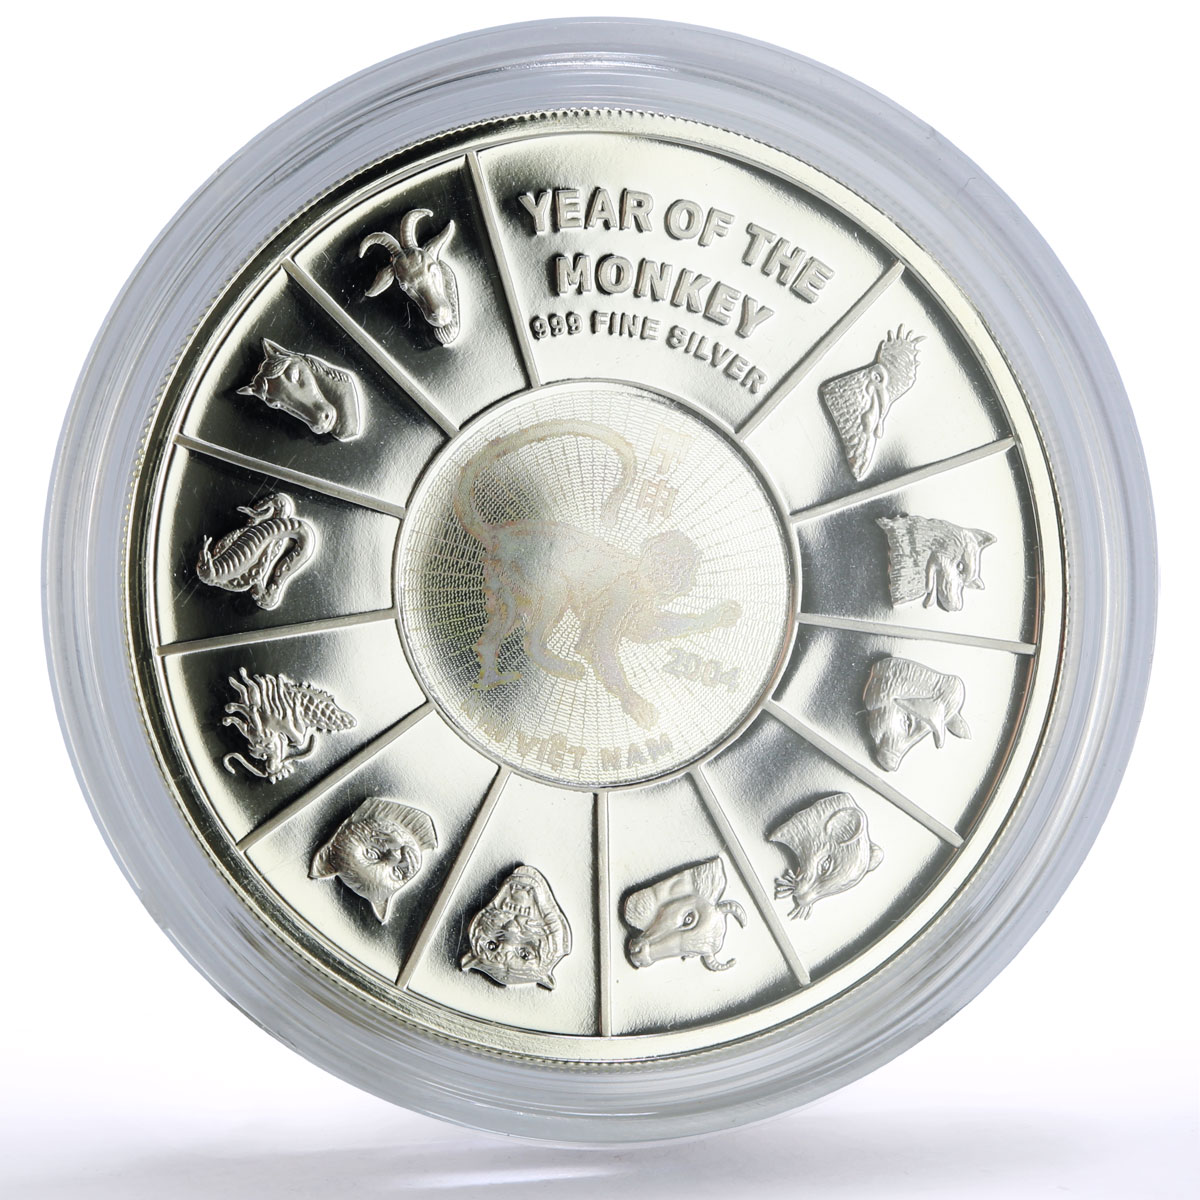 Vietnam 10000 dong Lunar Calendar Year of the Monkey Hologram silver coin 2004